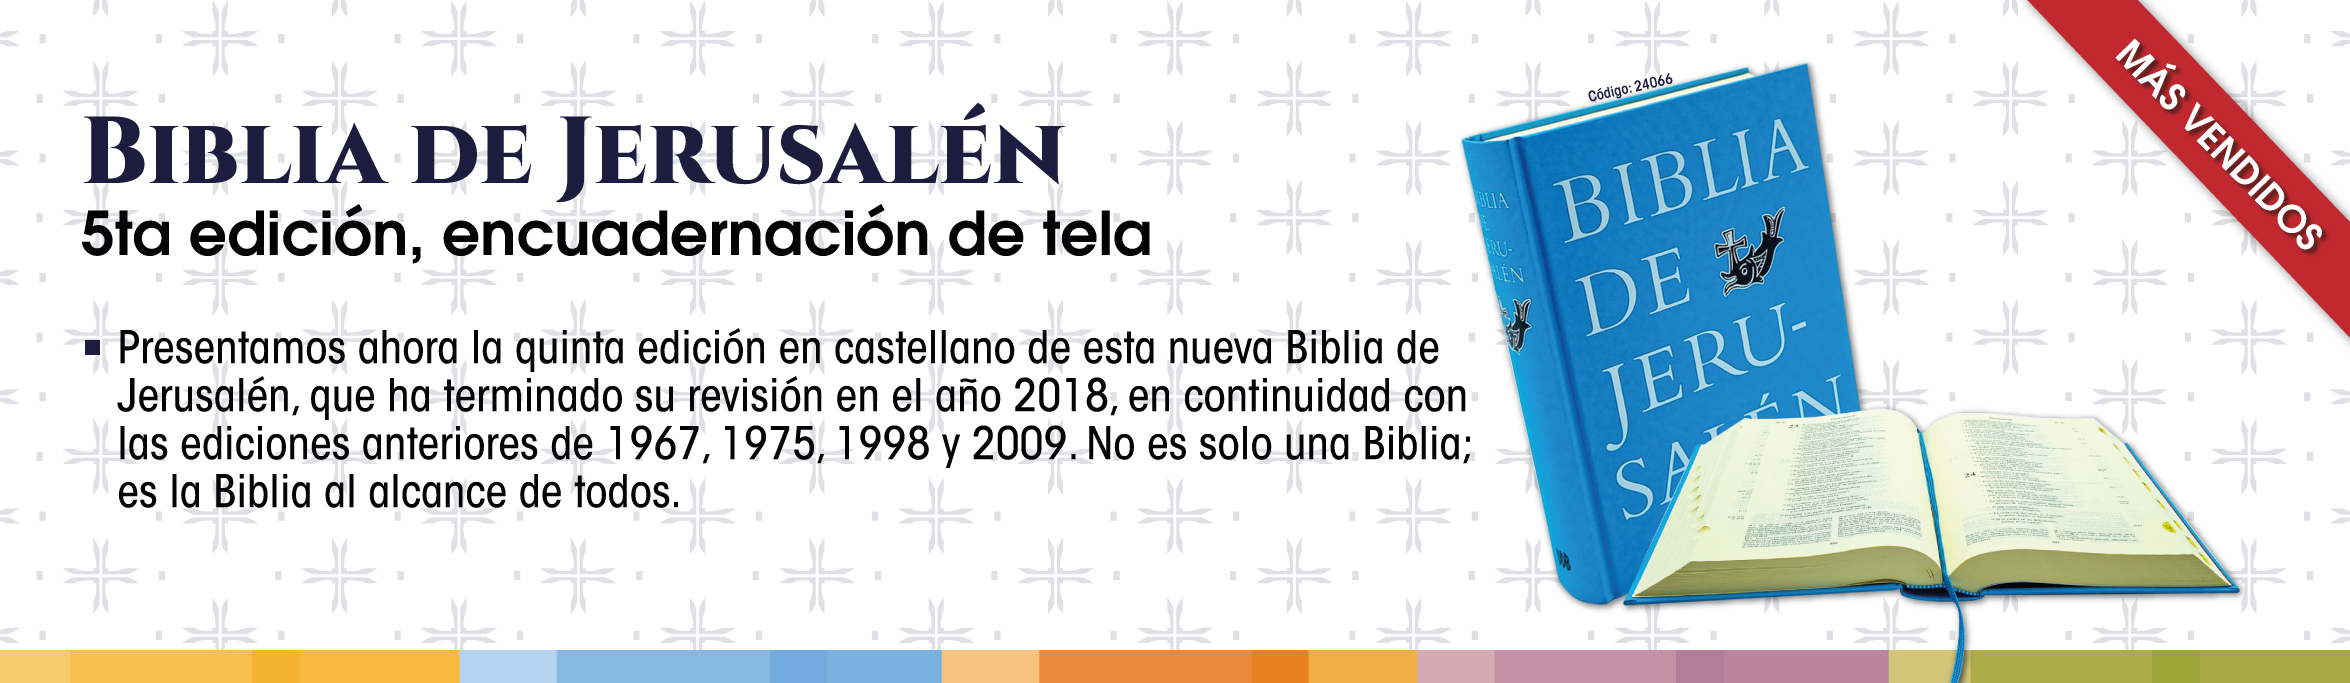 Biblia de Jerusalén manual 5ª edición – Encuadernación de tela